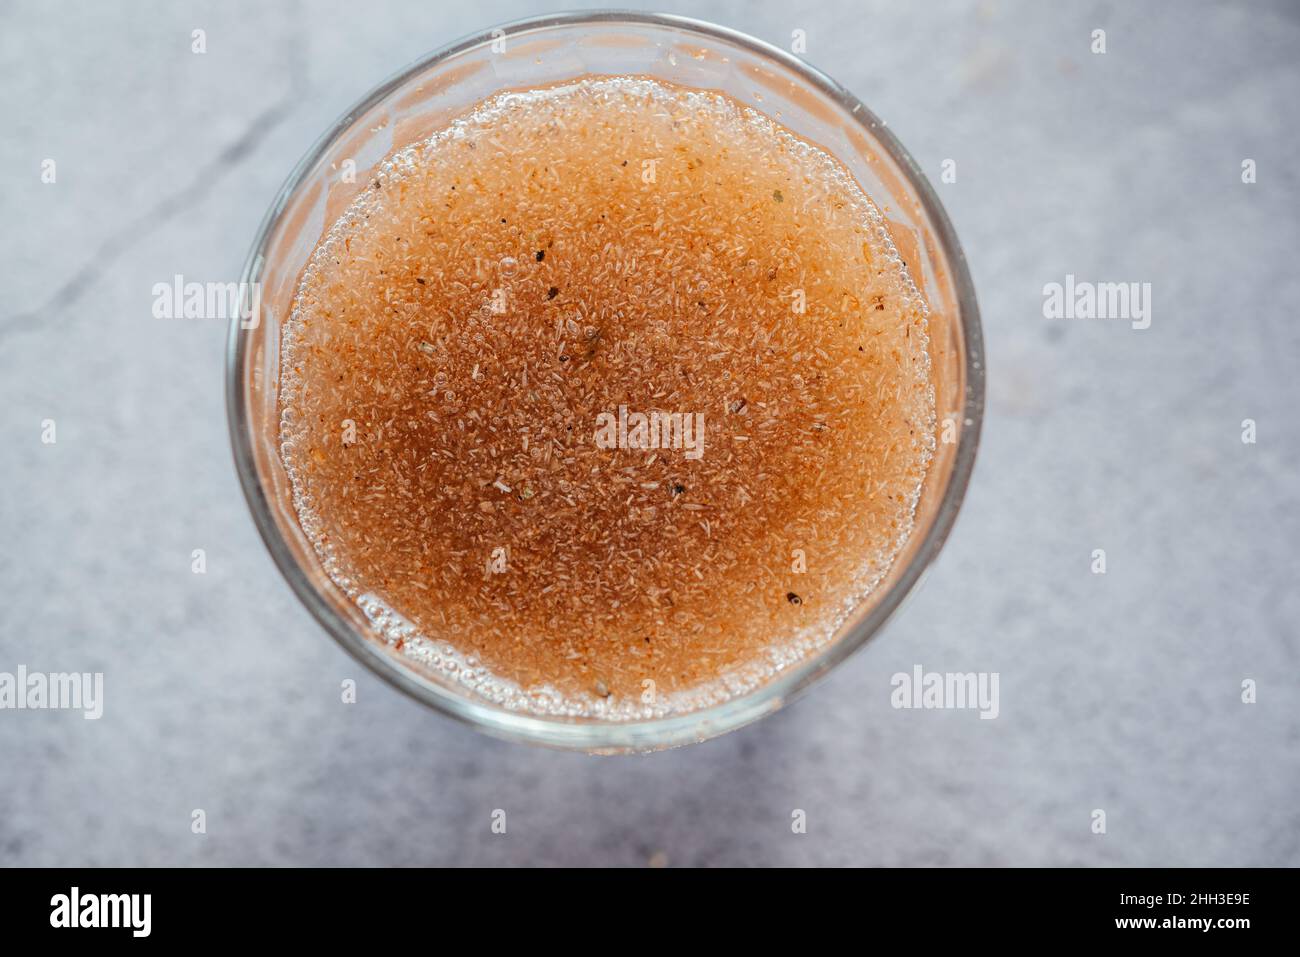 Un vaso de suplemento de fibra dietética soluble en agua de cáscara de psyllium, dieta saludable por la mañana Foto de stock